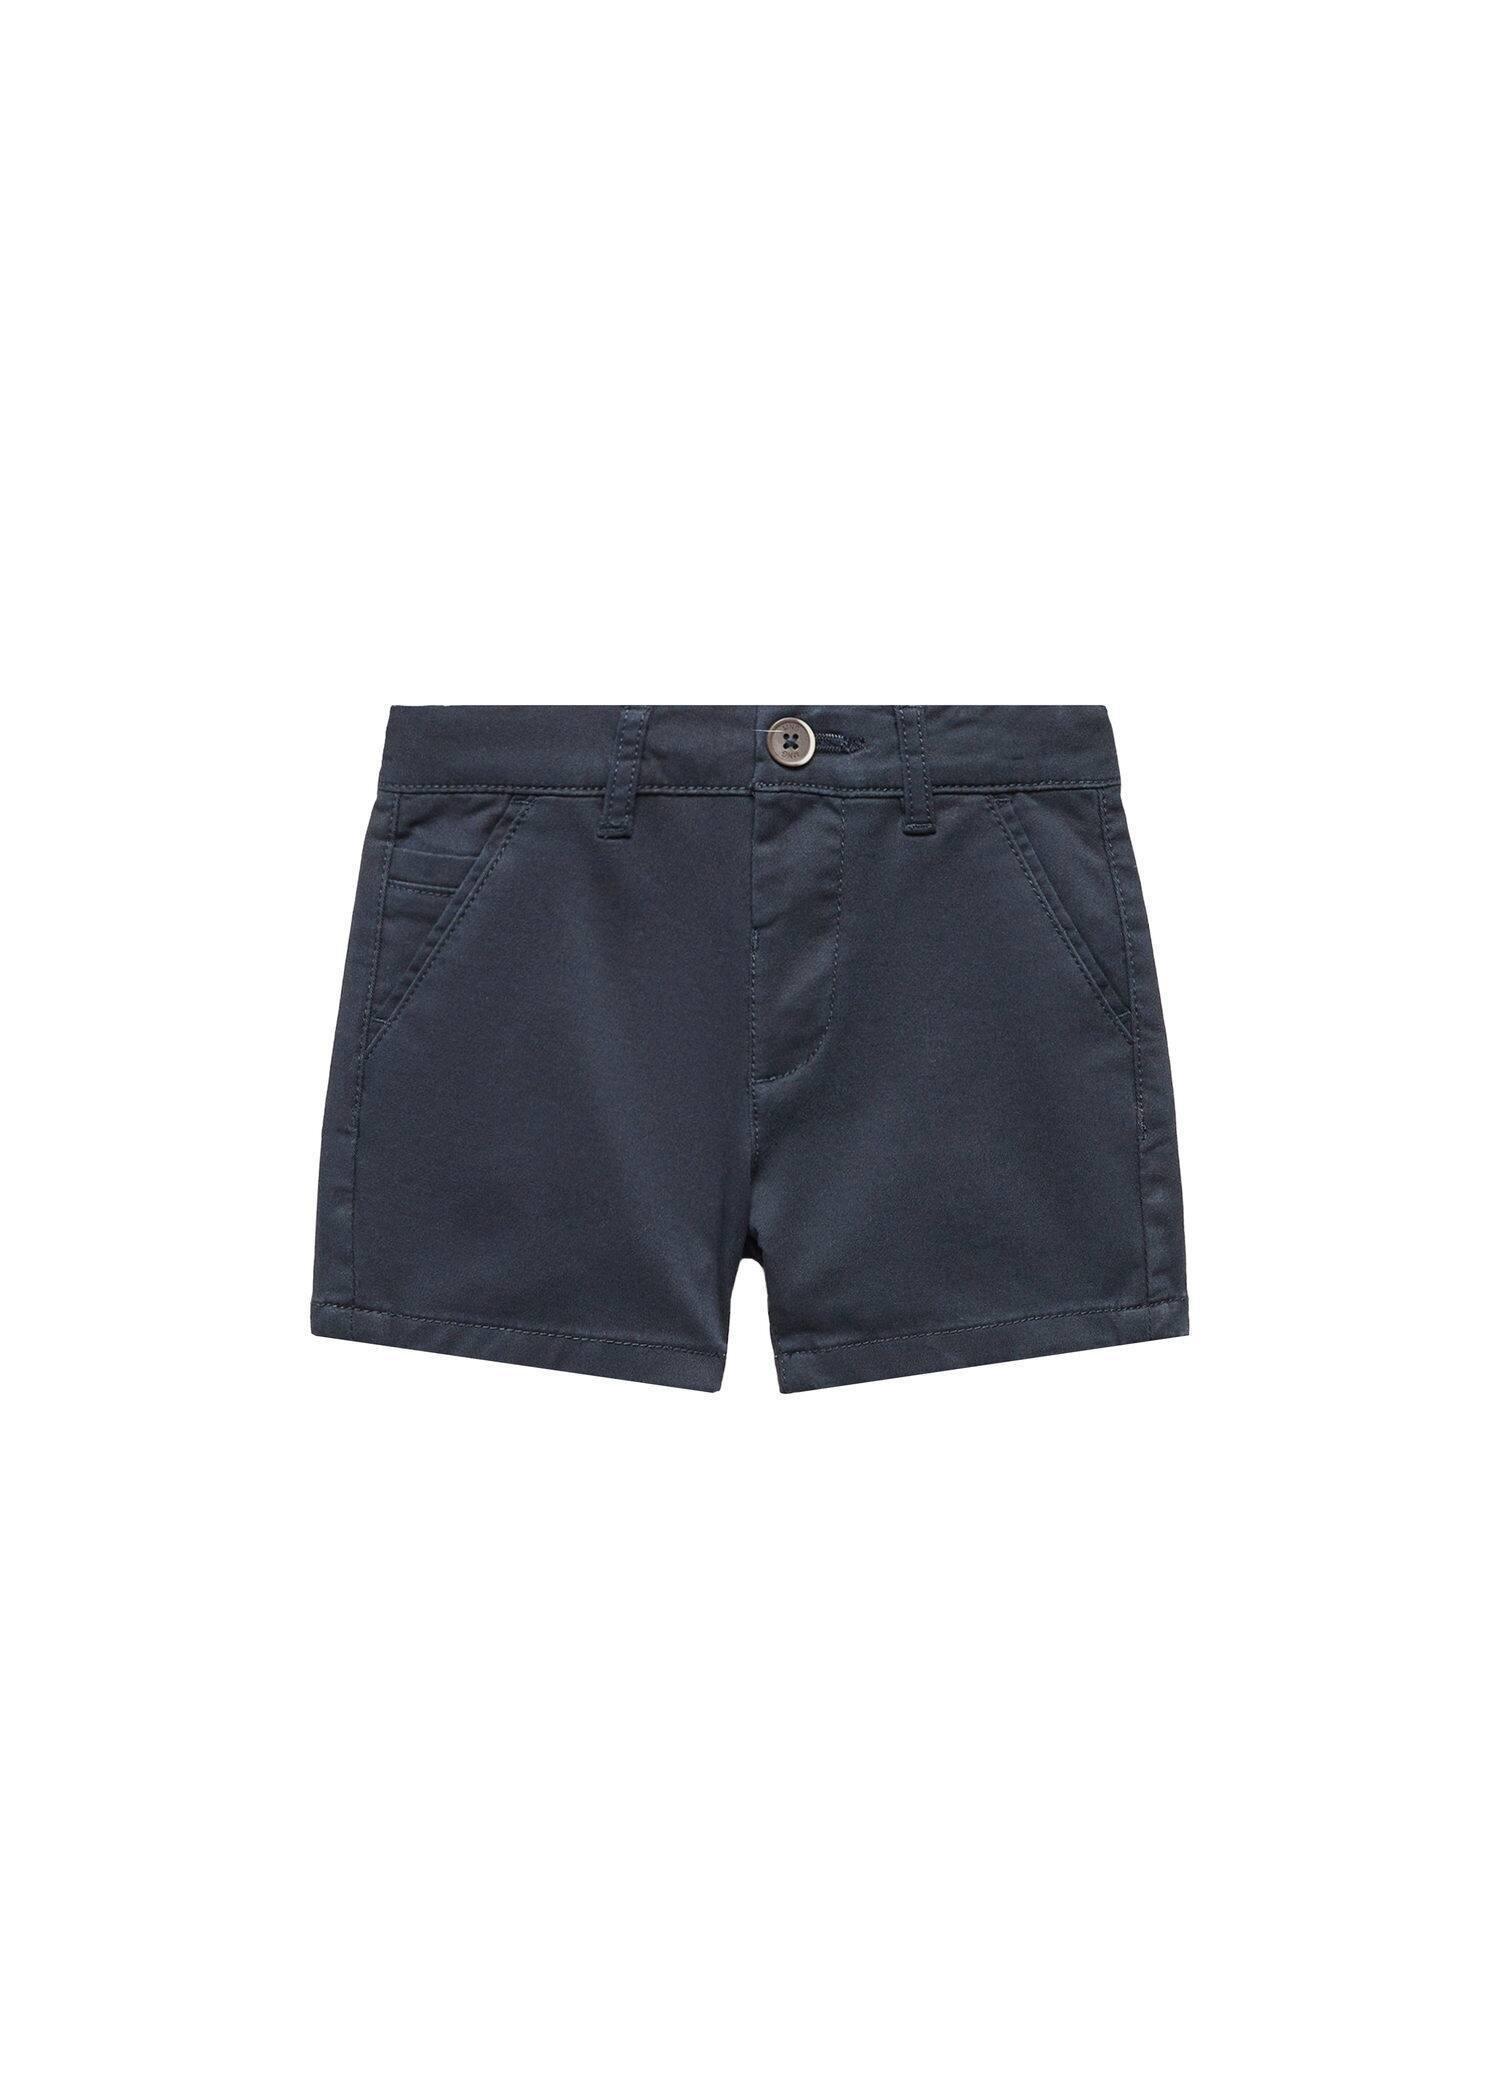 Mango - Navy Chino Bermuda Shorts, Kids Boys